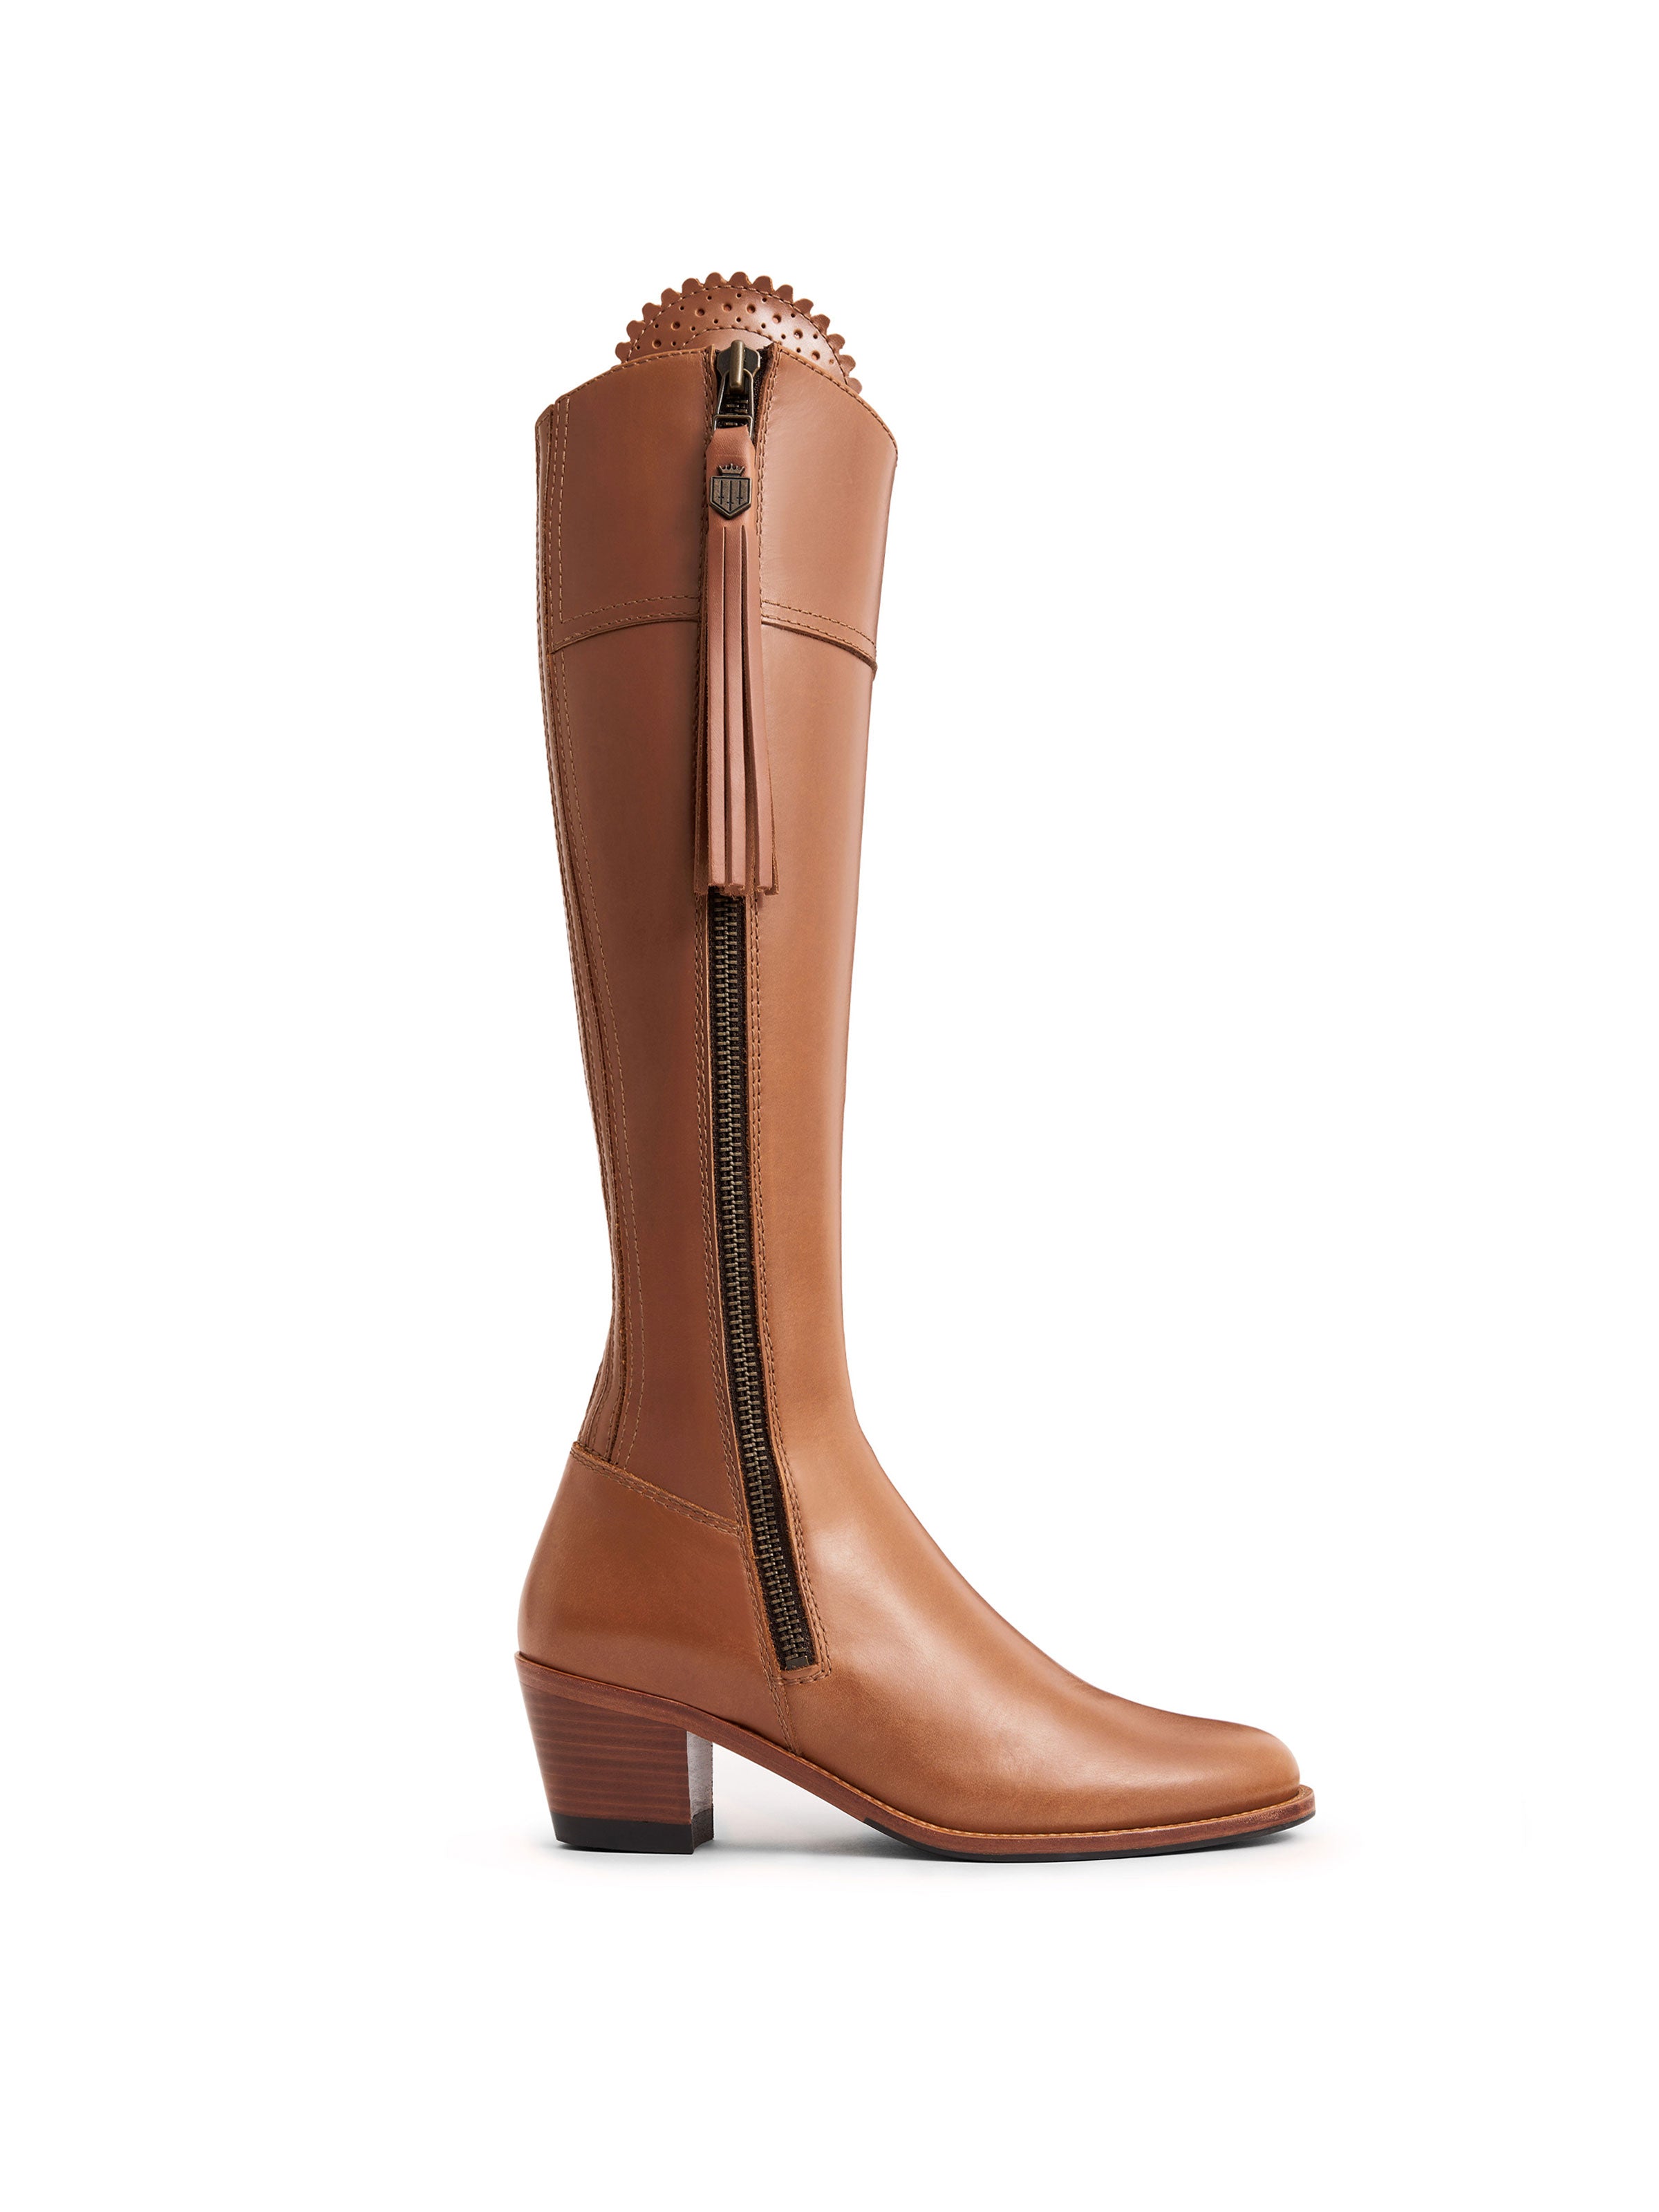 Heeled Regina - Narrow Tall Boot in Tan Leather | Fairfax & Favor